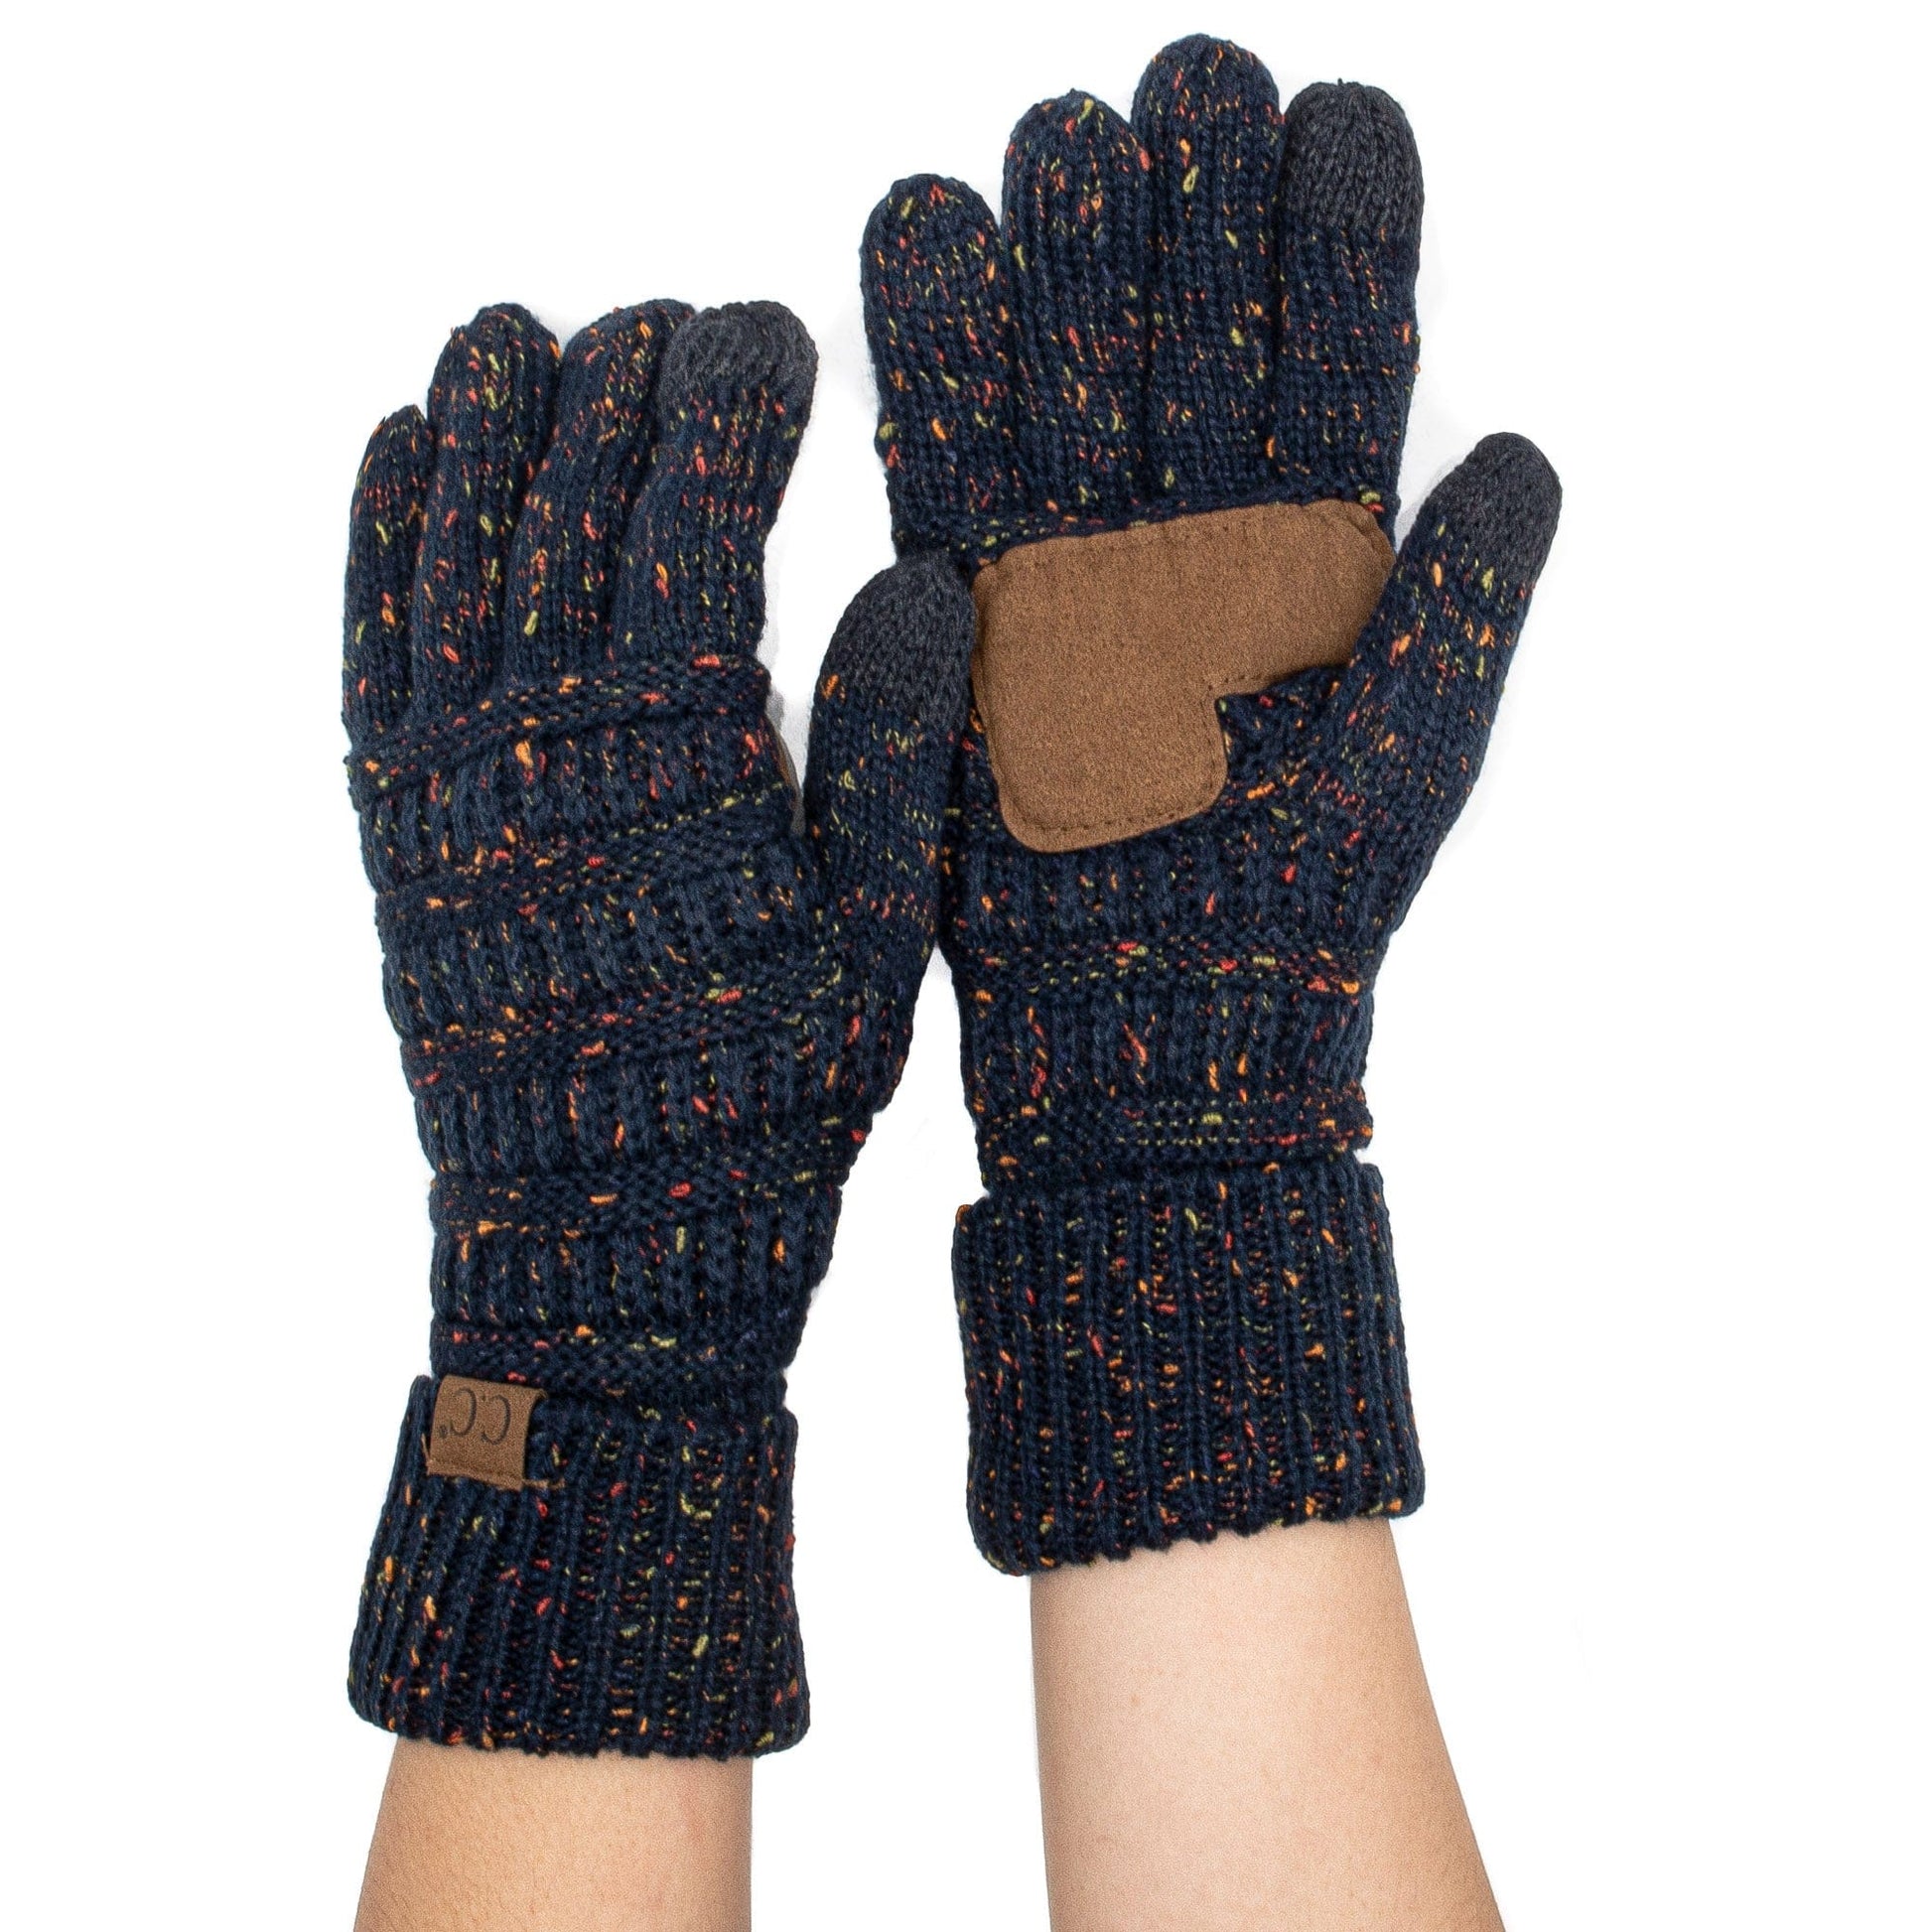 C.C Apparel C.C G33 - Unisex Cable Knit Winter Warm Anti-Slip Touchscreen Confetti Texting Gloves